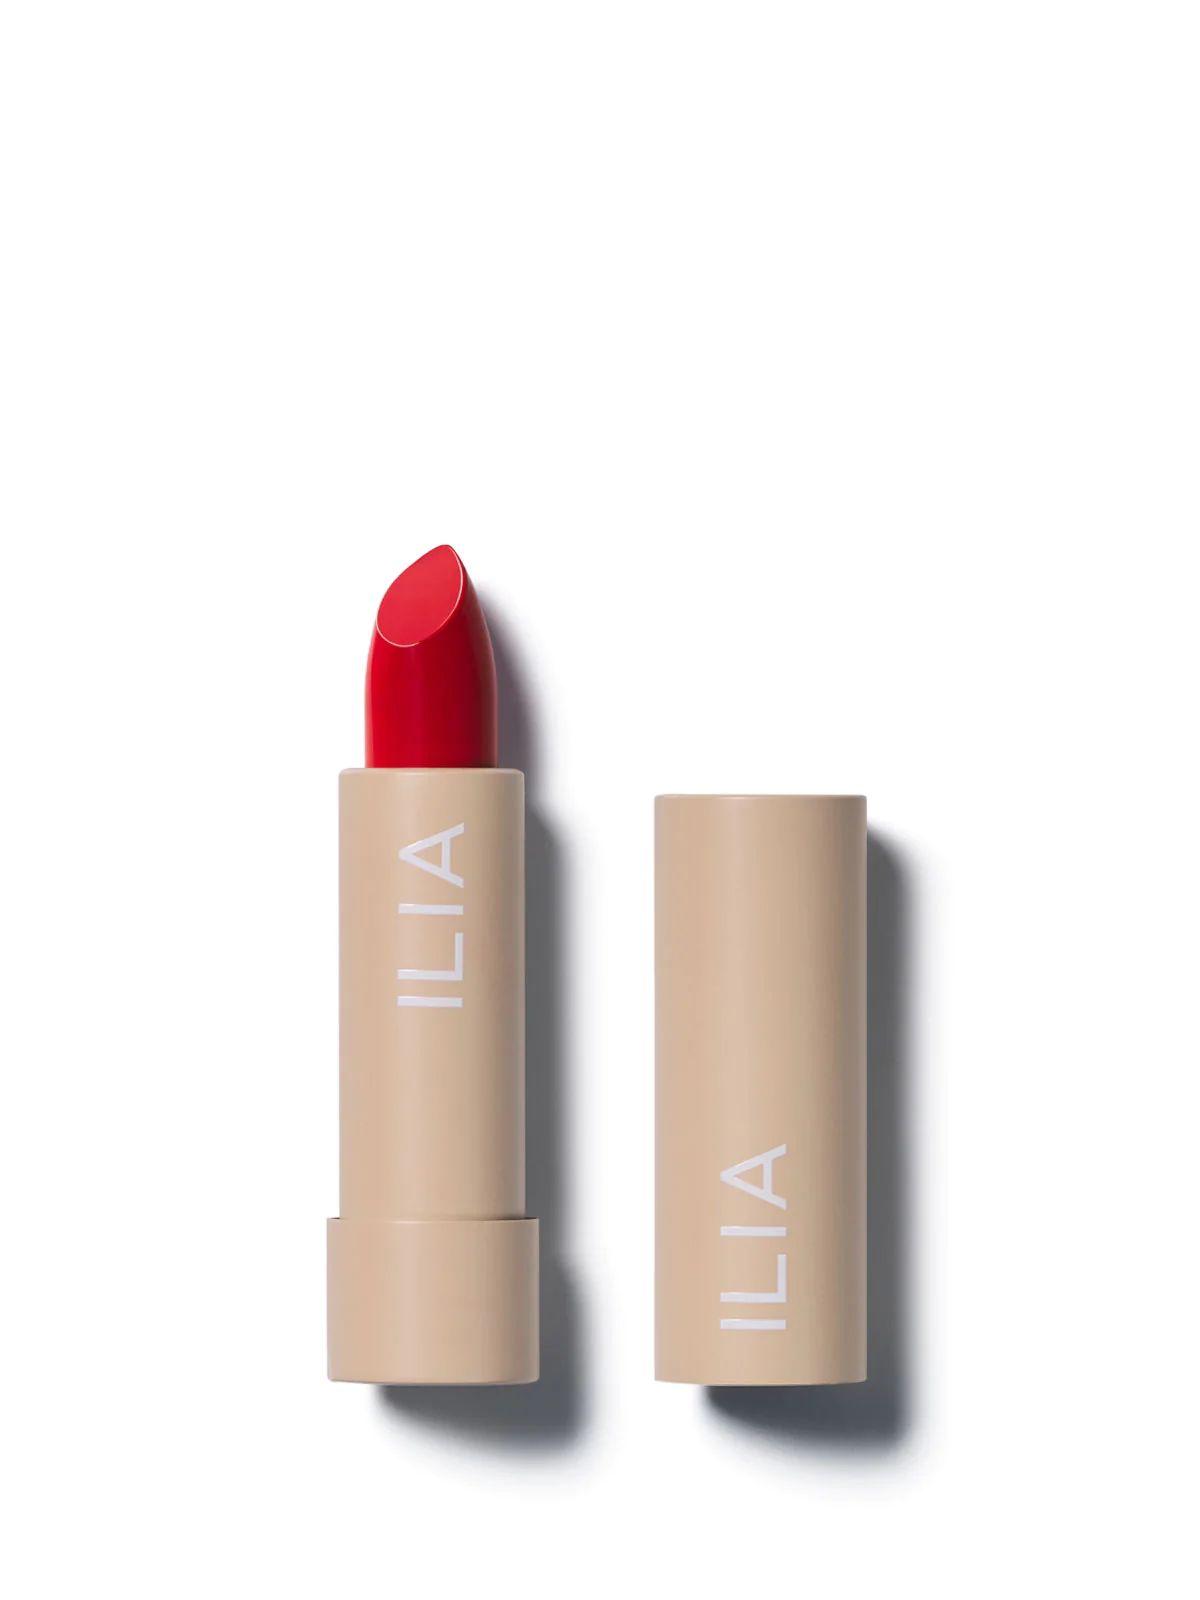 Lipstick Makeup: Soft Coral Red with Warm Undertones | ILIA | ILIA Beauty